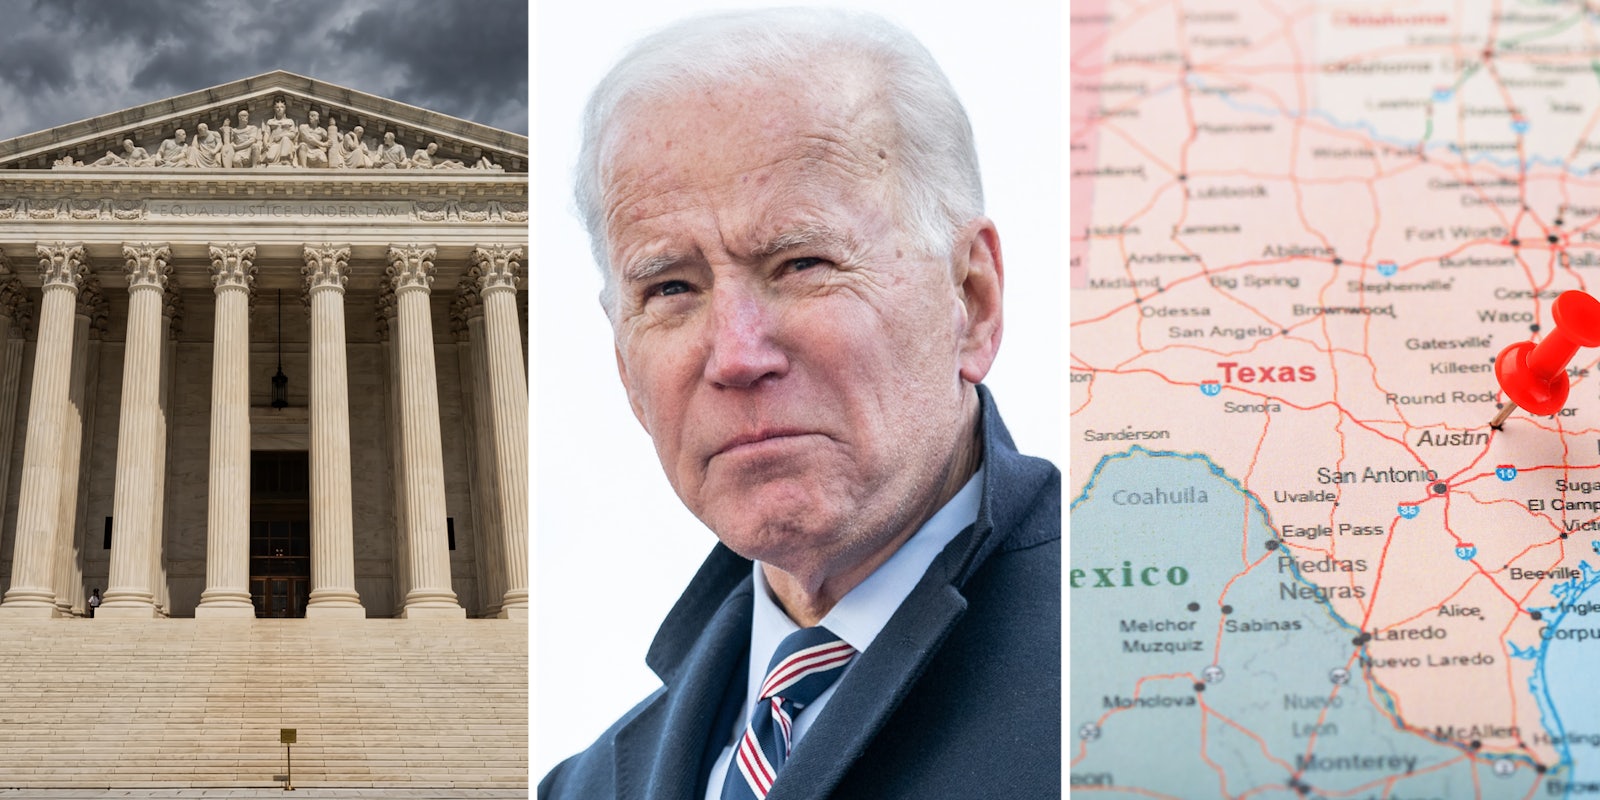 Supreme Court(l), Joe Biden(c), Texas on map(r)